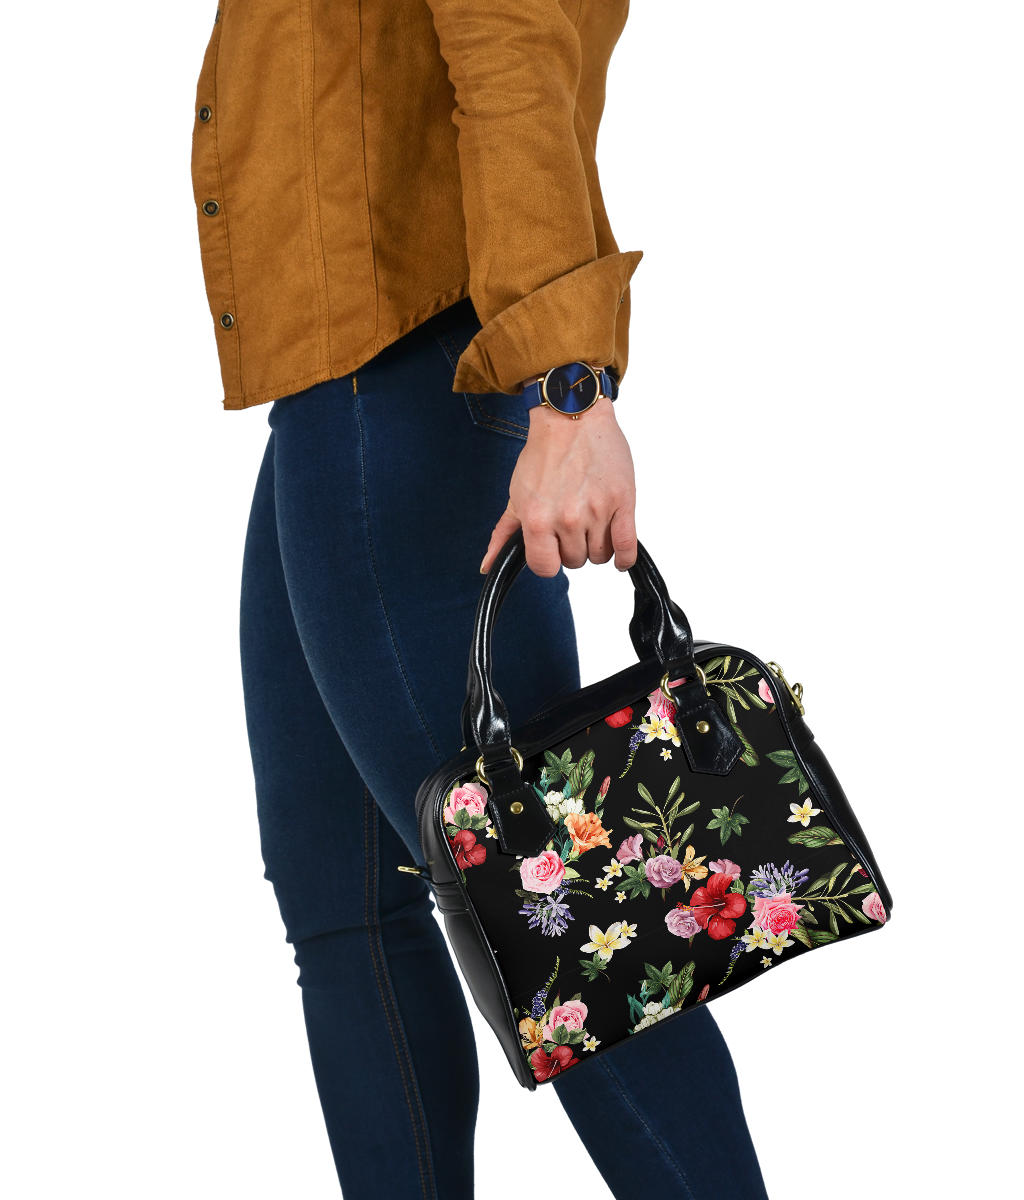 Black Floral Handbag